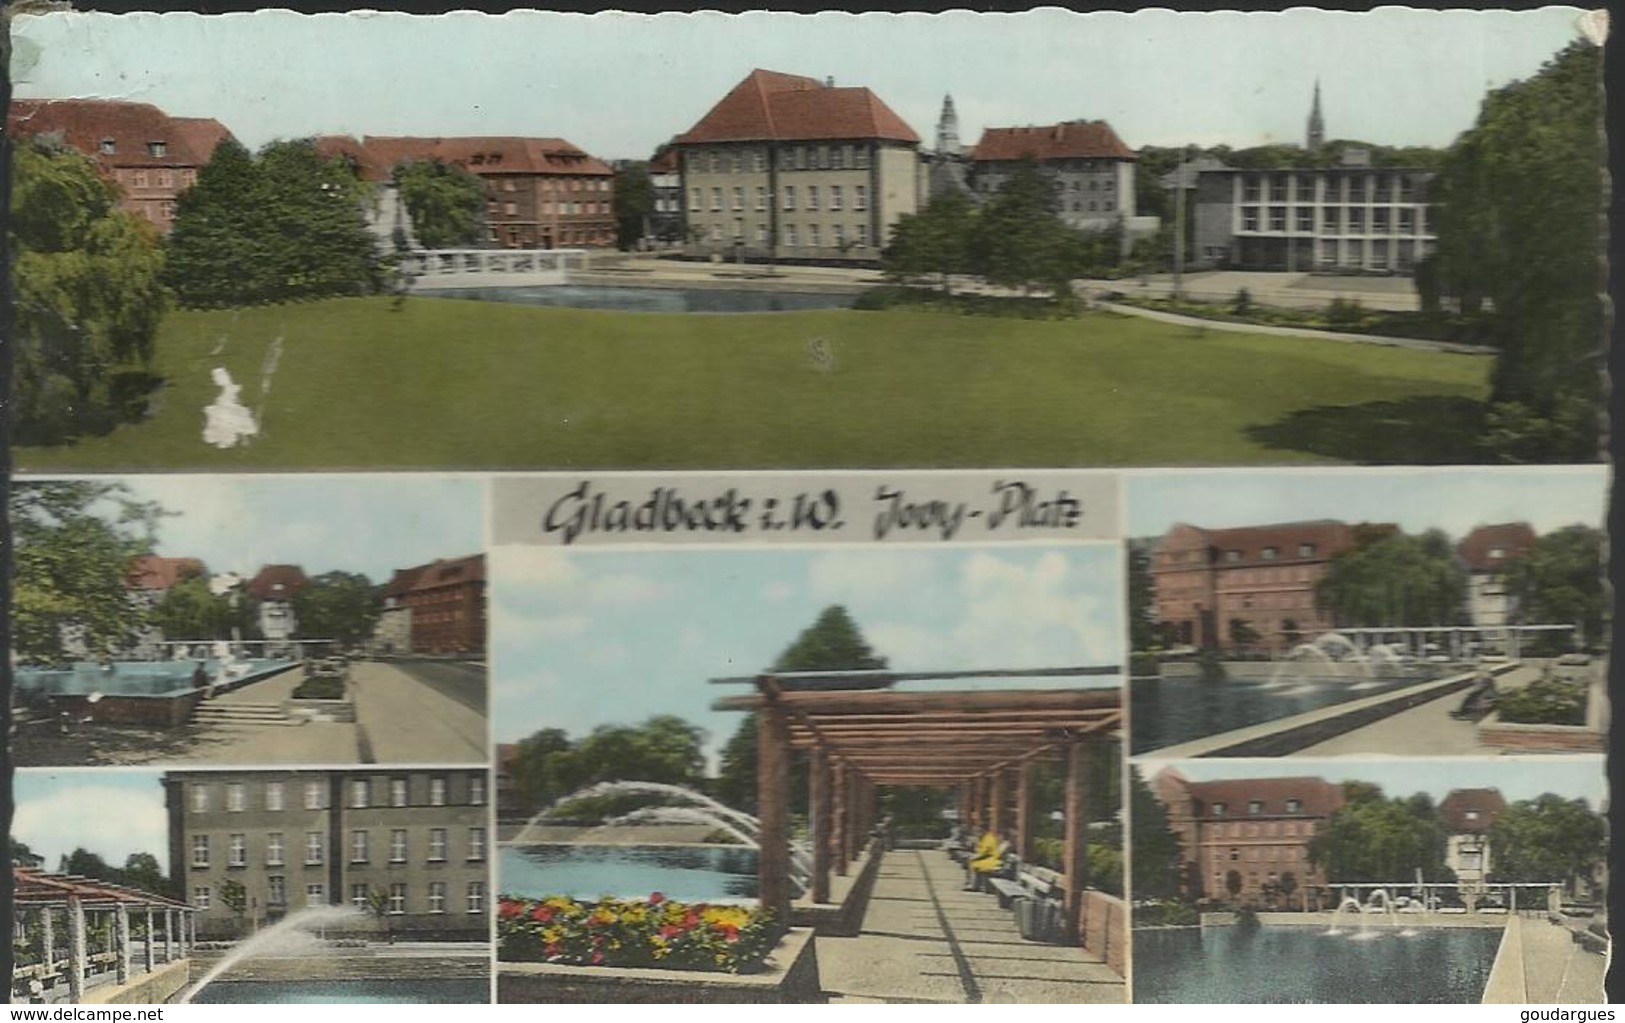 Gladbeck I.W. Jovy Platz - Grevenbroich